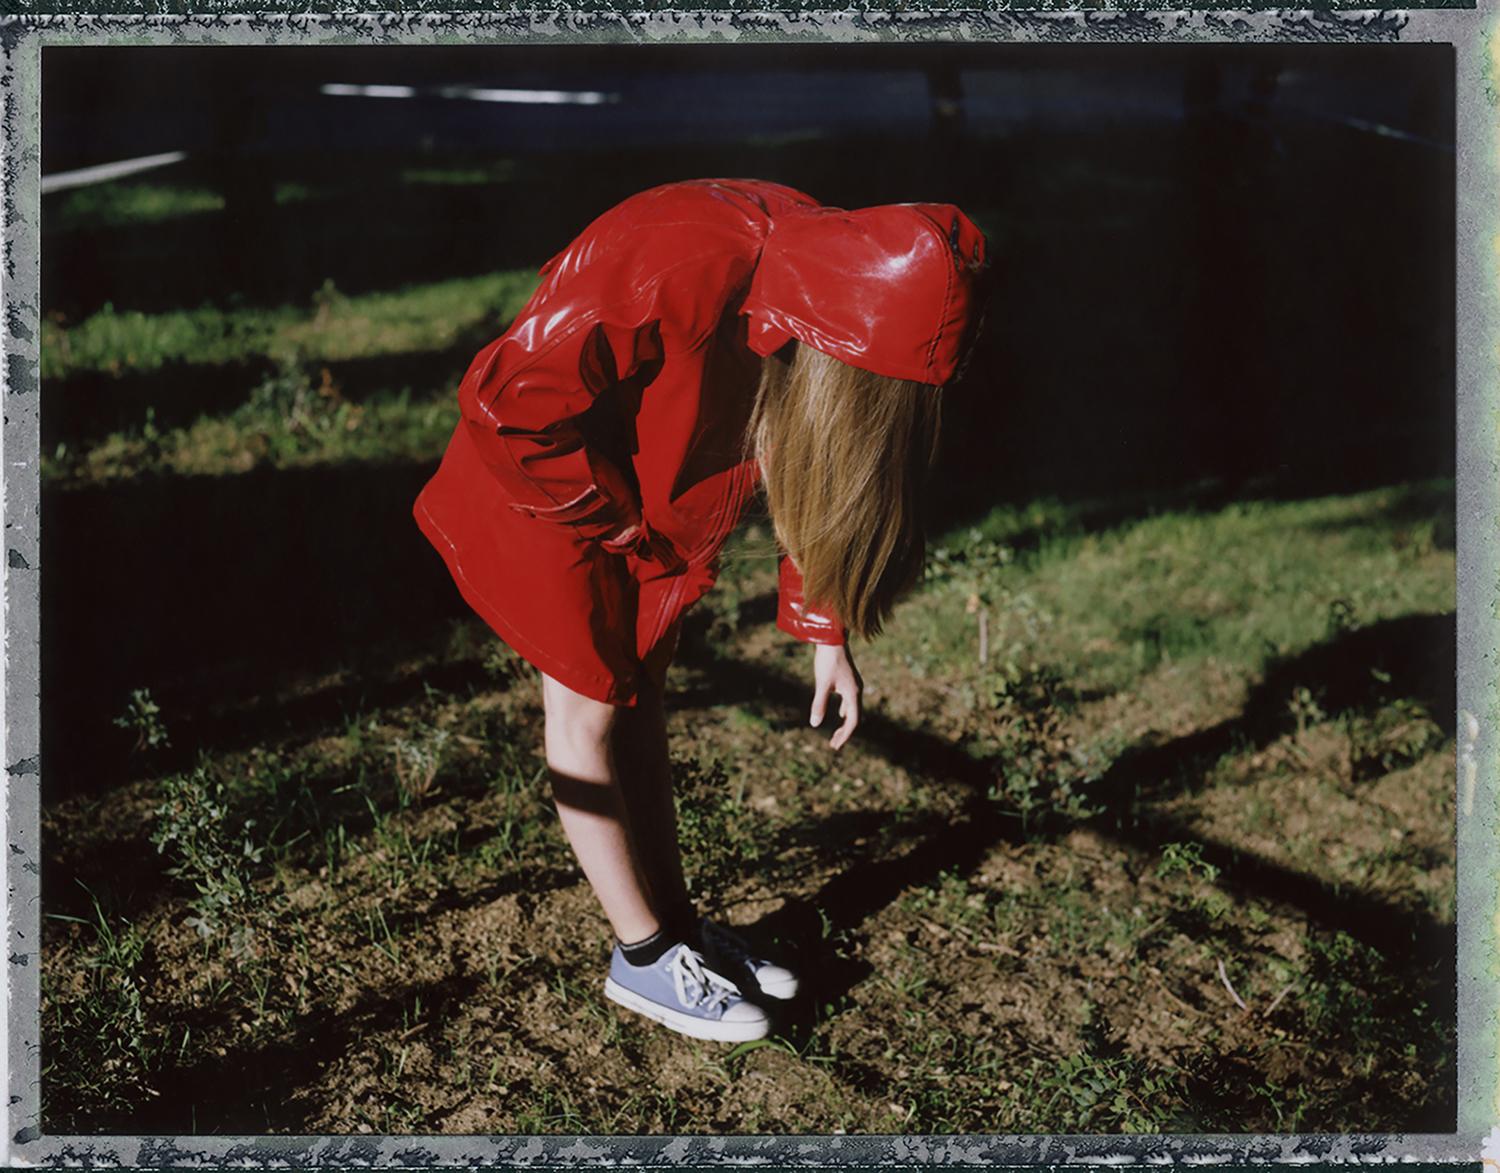 Cristina Fontsare Figurative Photograph – The Hood's ist zu kurz geraten  - Contemporary, Polaroid, Fotografie, Jugend